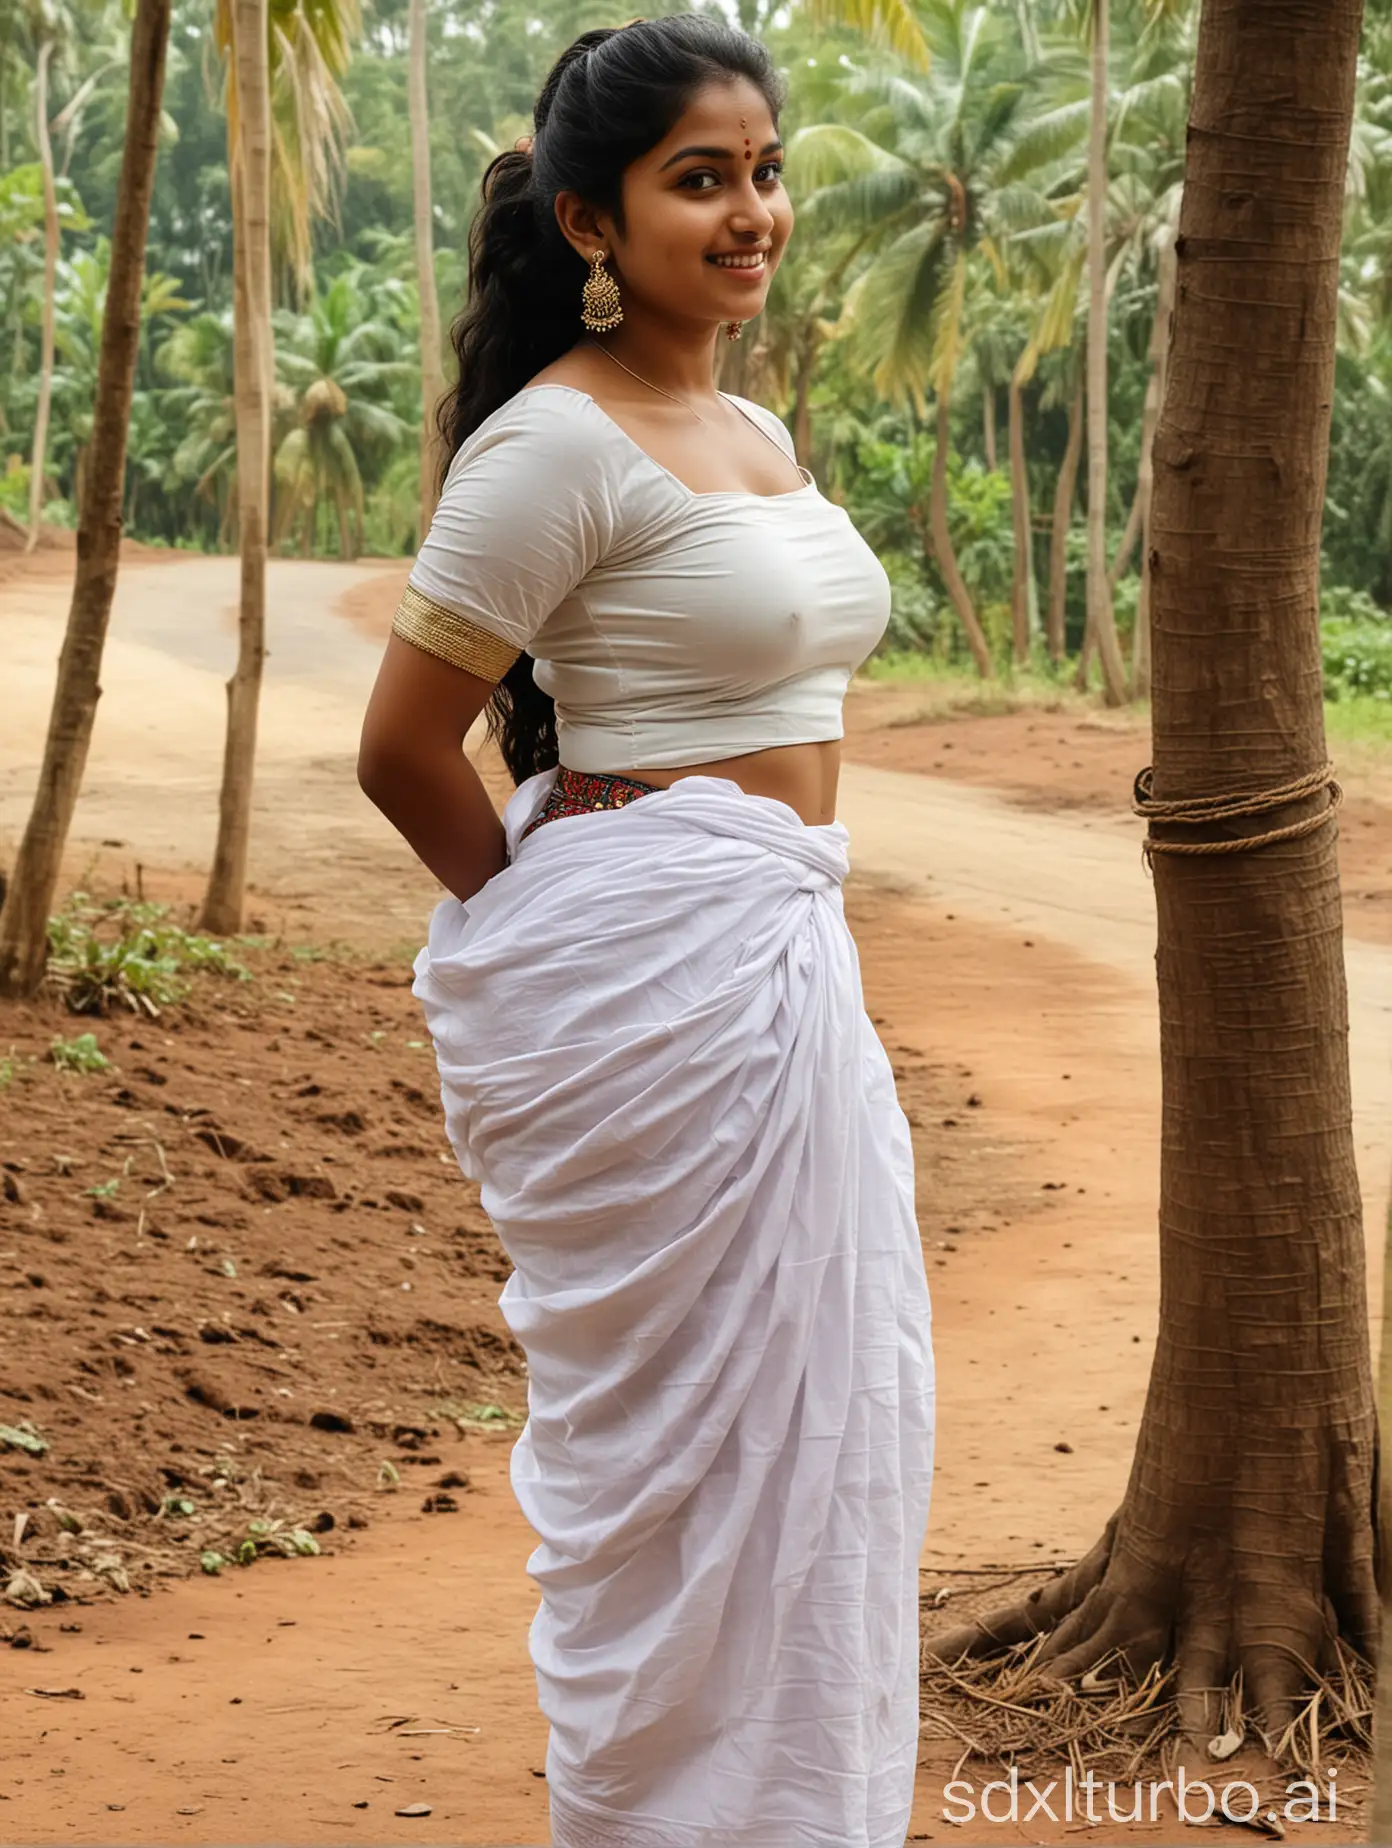 Indian village kerala curvy village girl , big ass booty. Wearing mundu kerala dress.